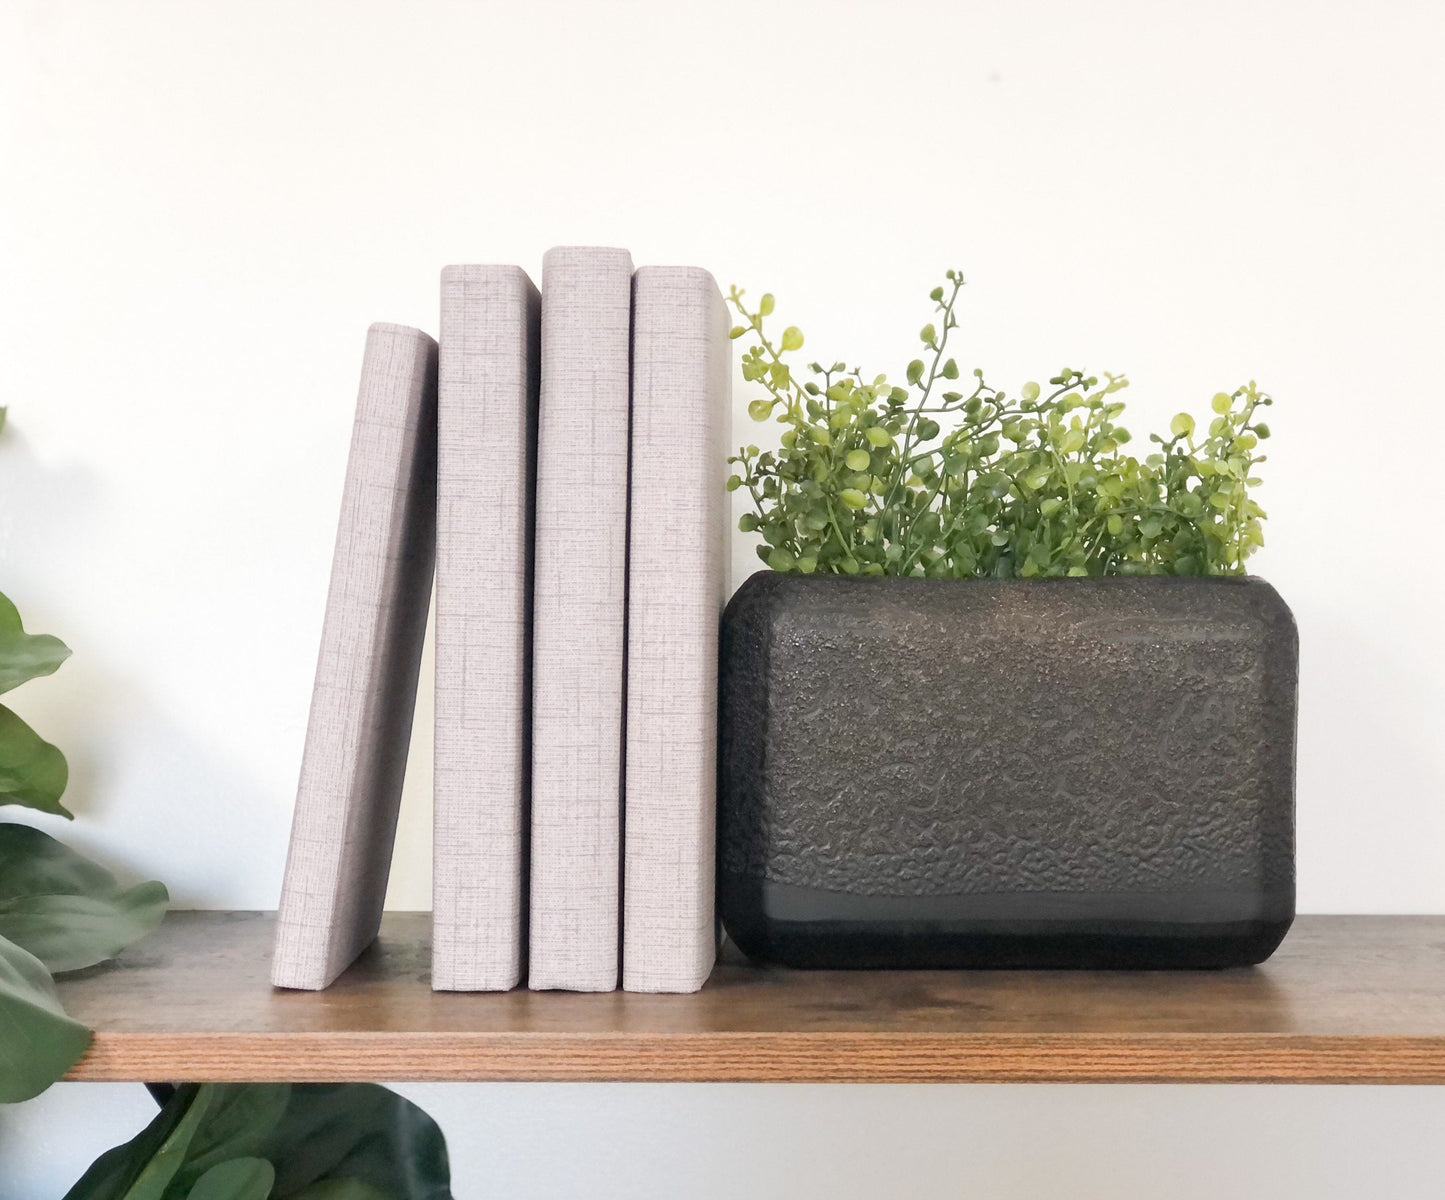 Gray Decorative Books and Black Vase for Home Decor